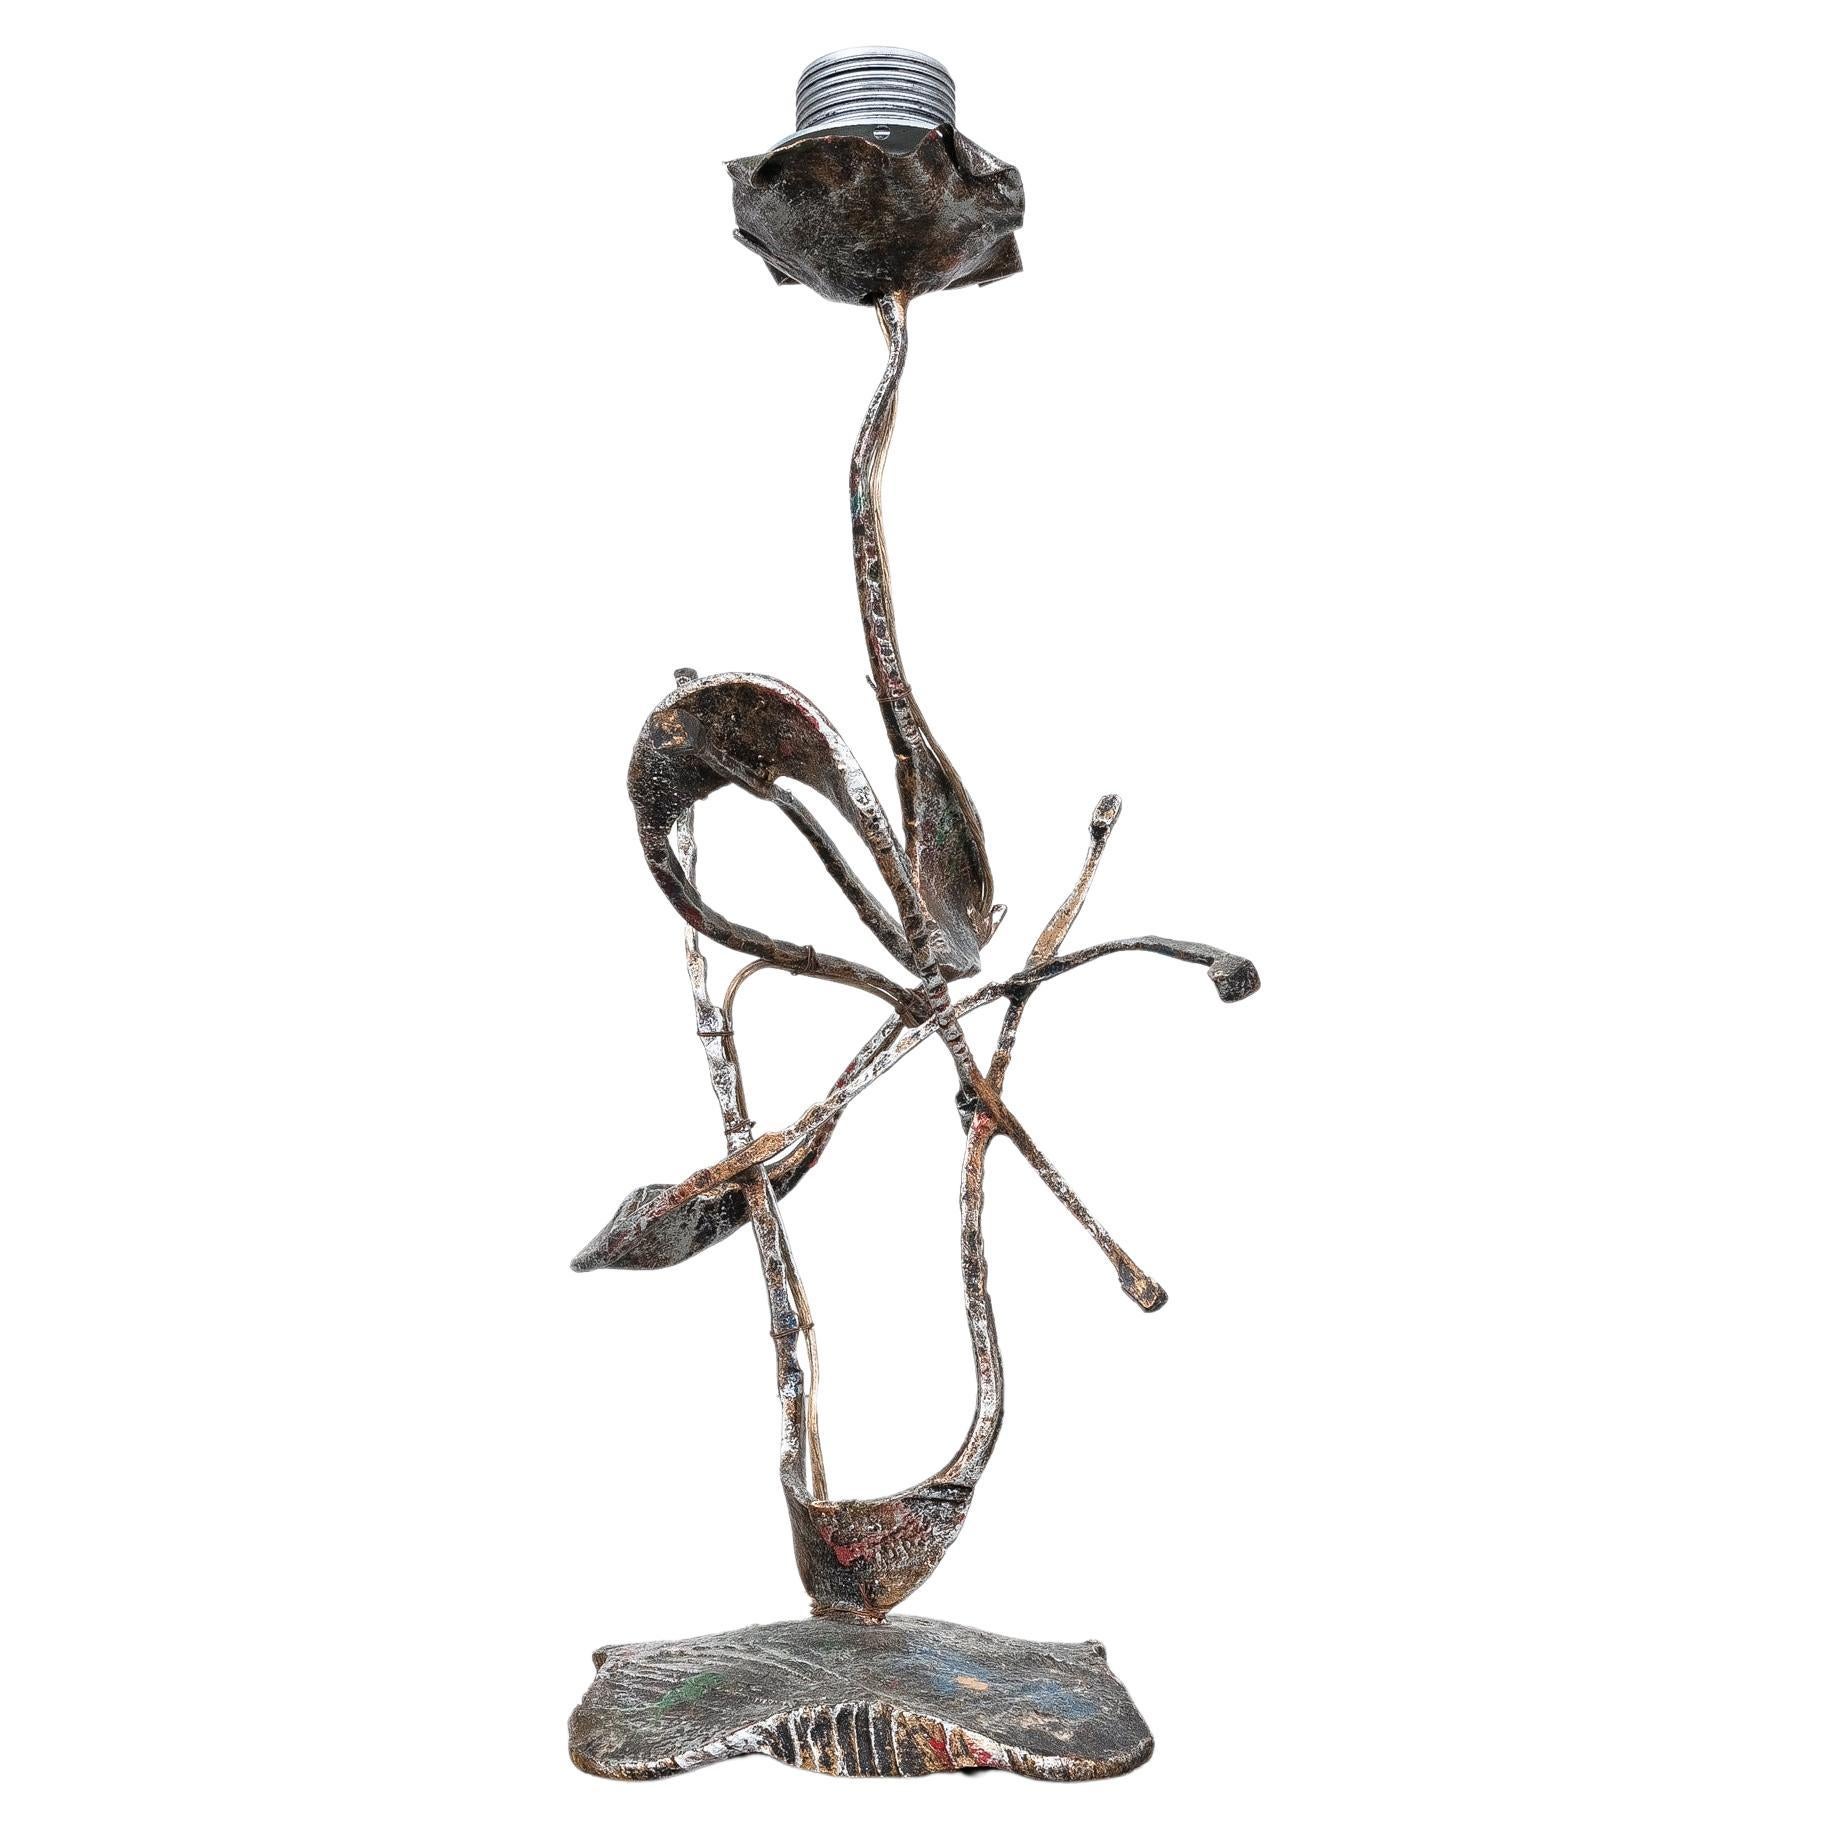 Salvino Marsura Artistic Brutalist Iron Table Lamp, Italy, 1960 For Sale